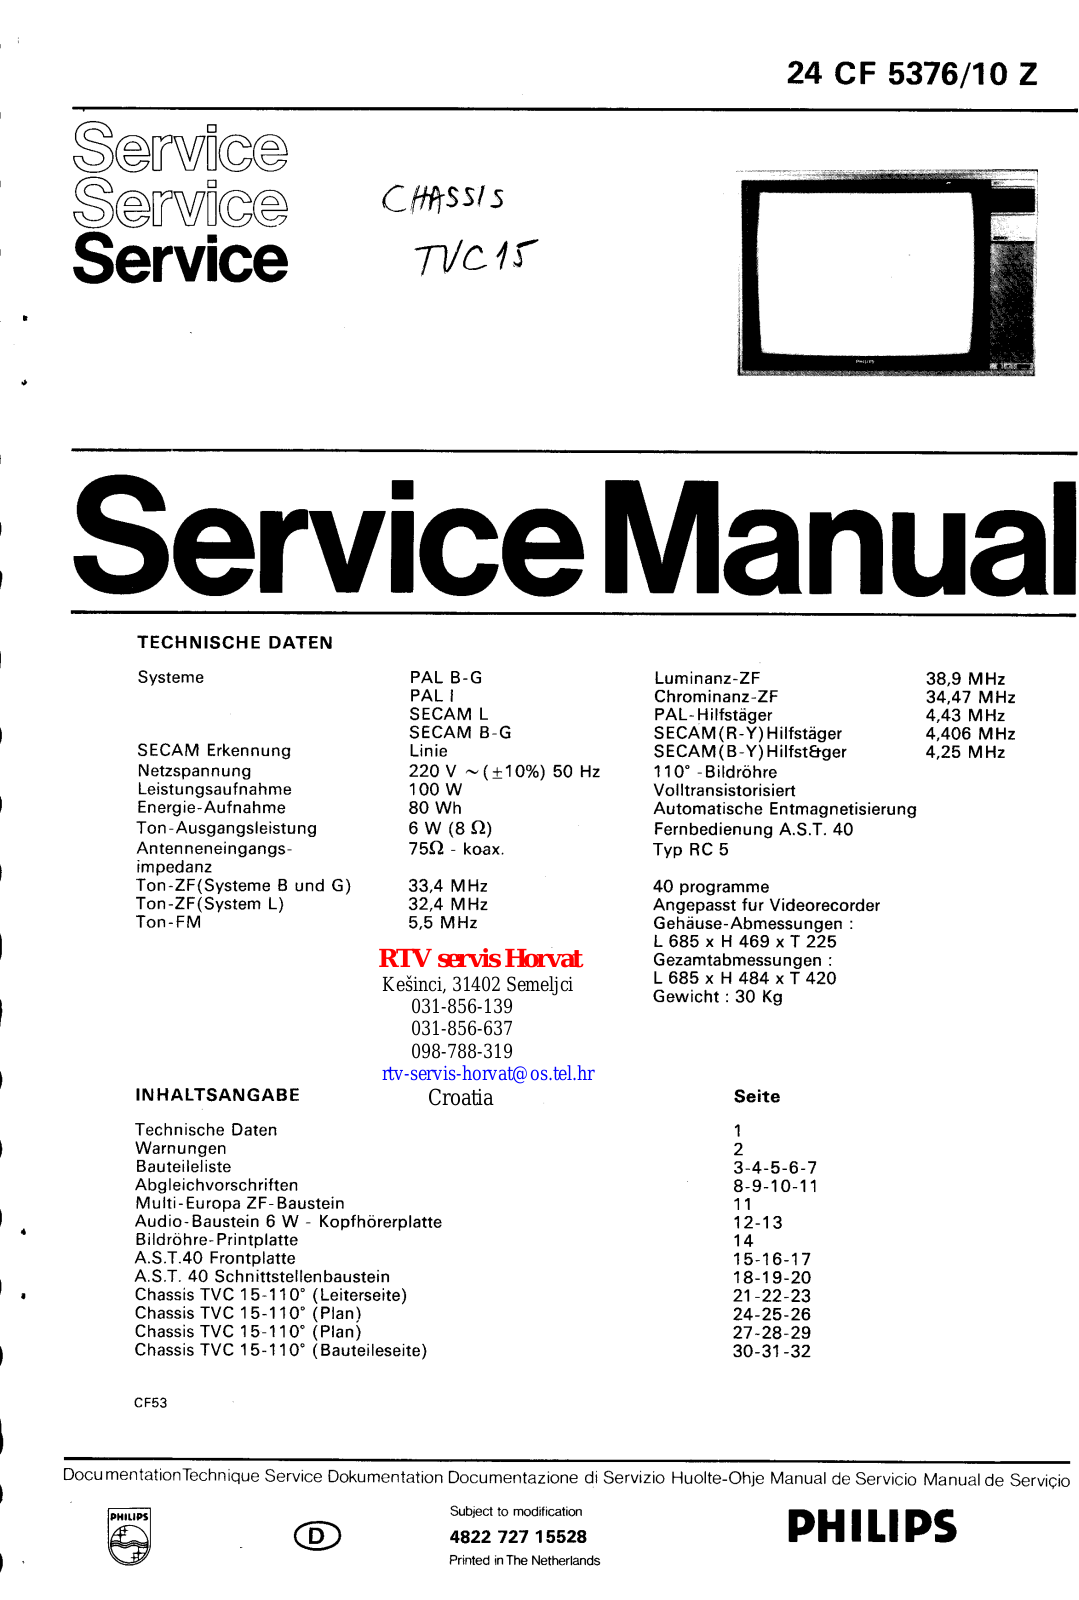 PHILIPS 24 CF 5376-10Z Service Manual